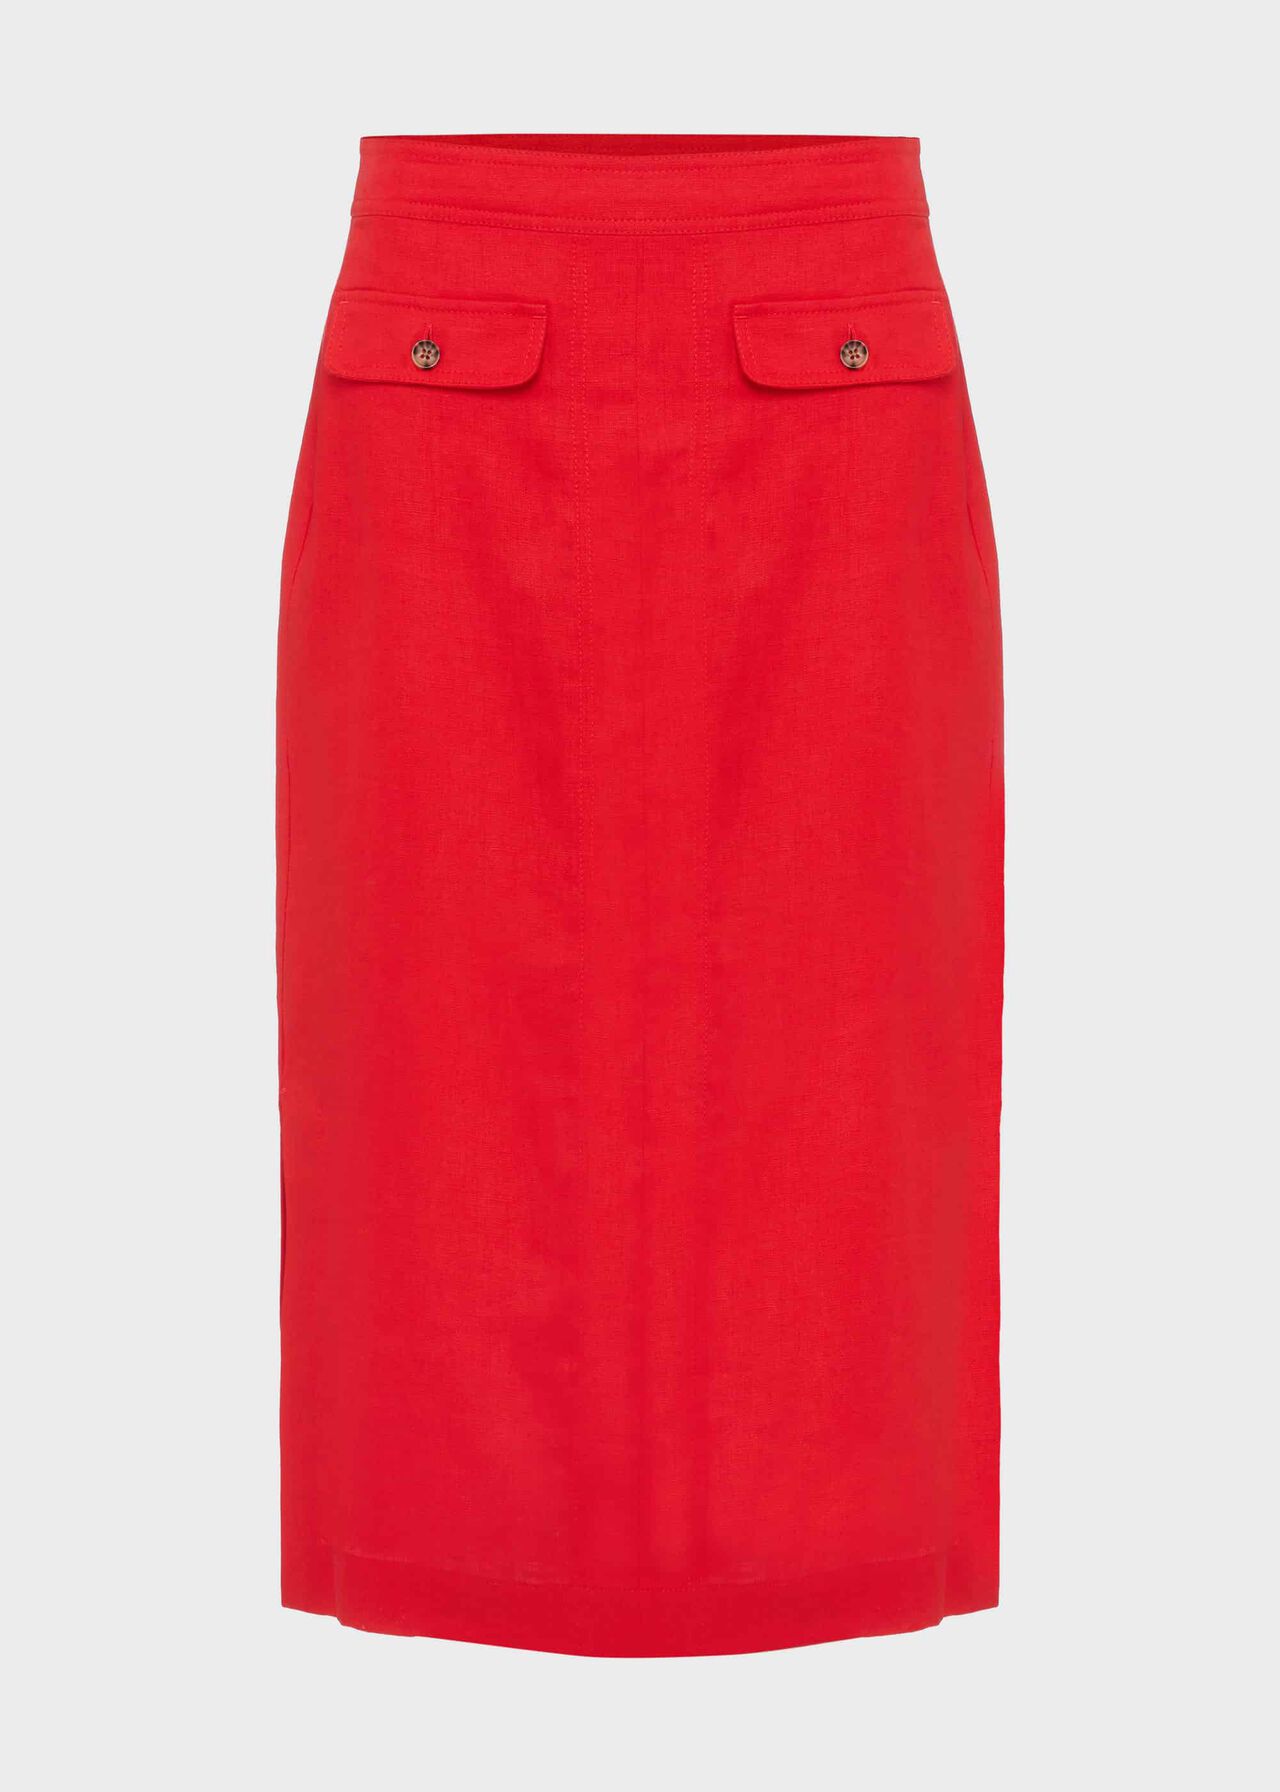 Georgiana Linen Skirt, Coral Red, hi-res